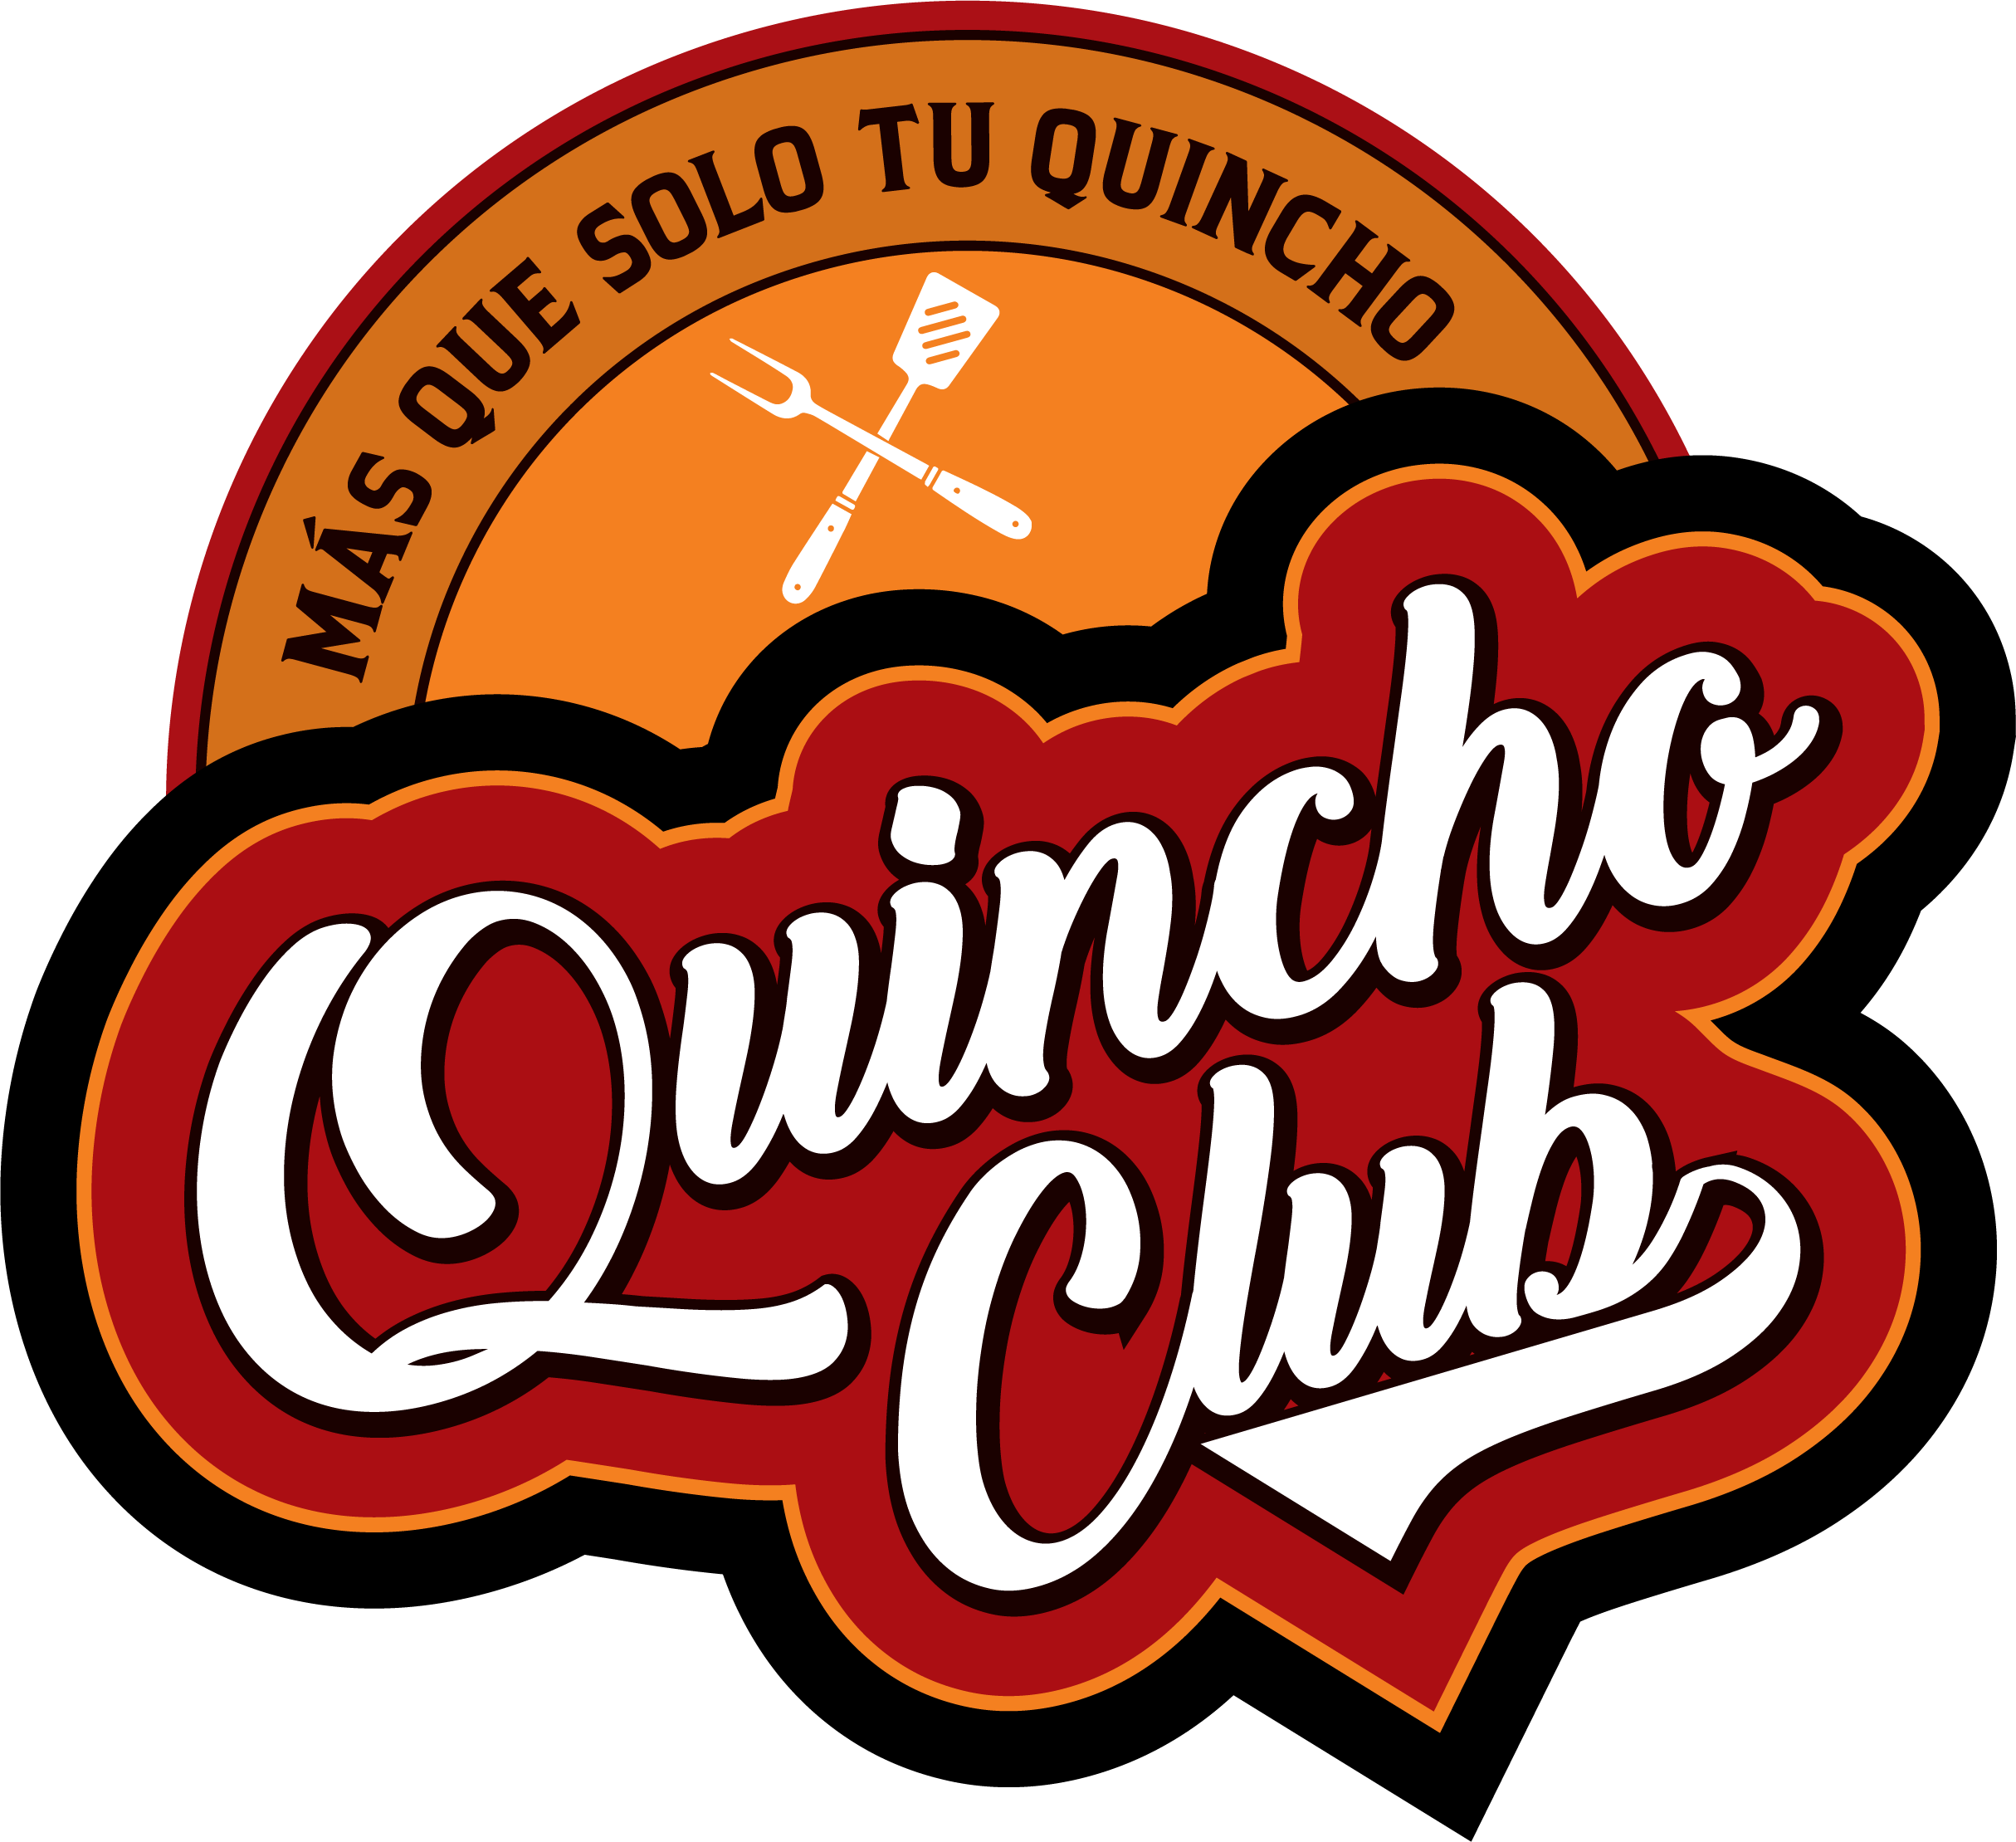 Quincho Club